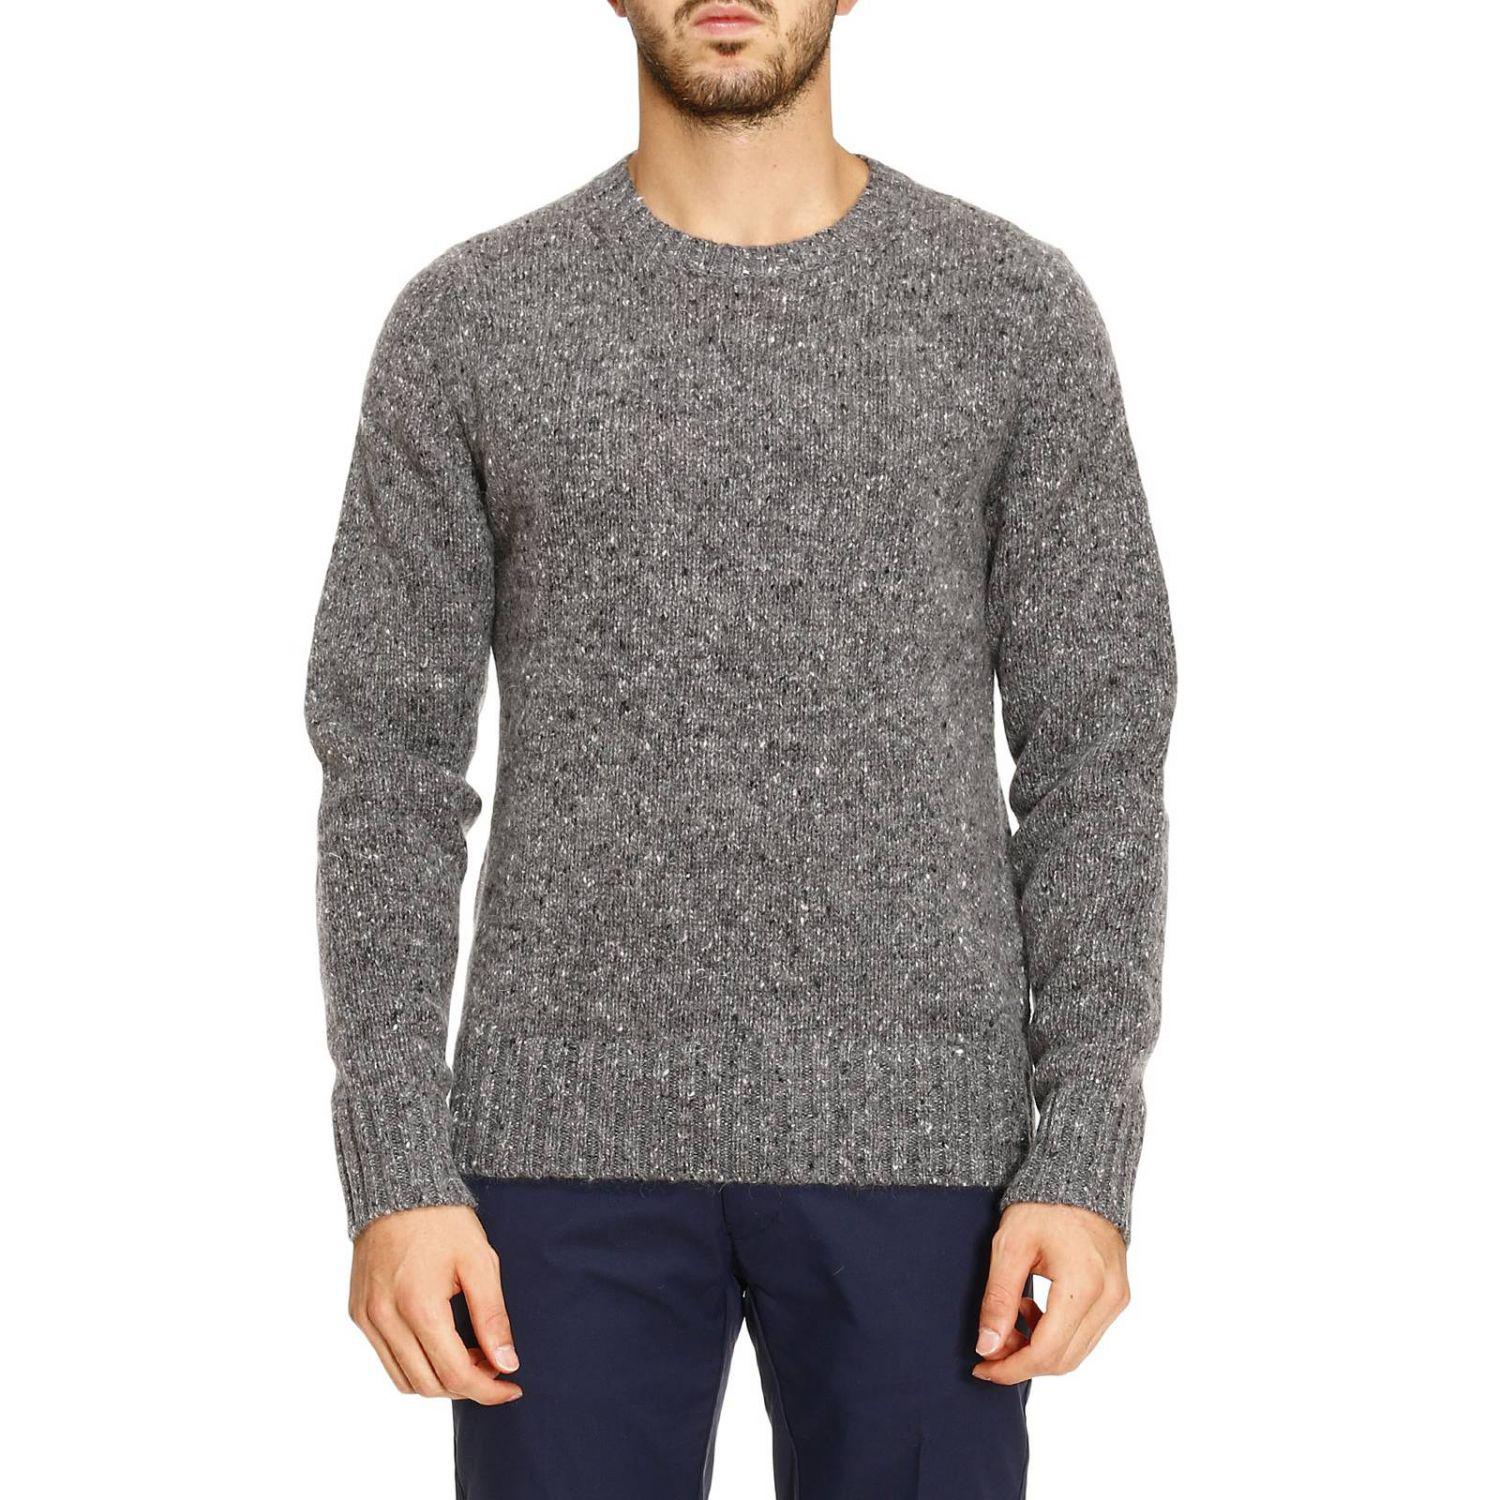 Lyst - Burberry Sweater Men in Gray for Men